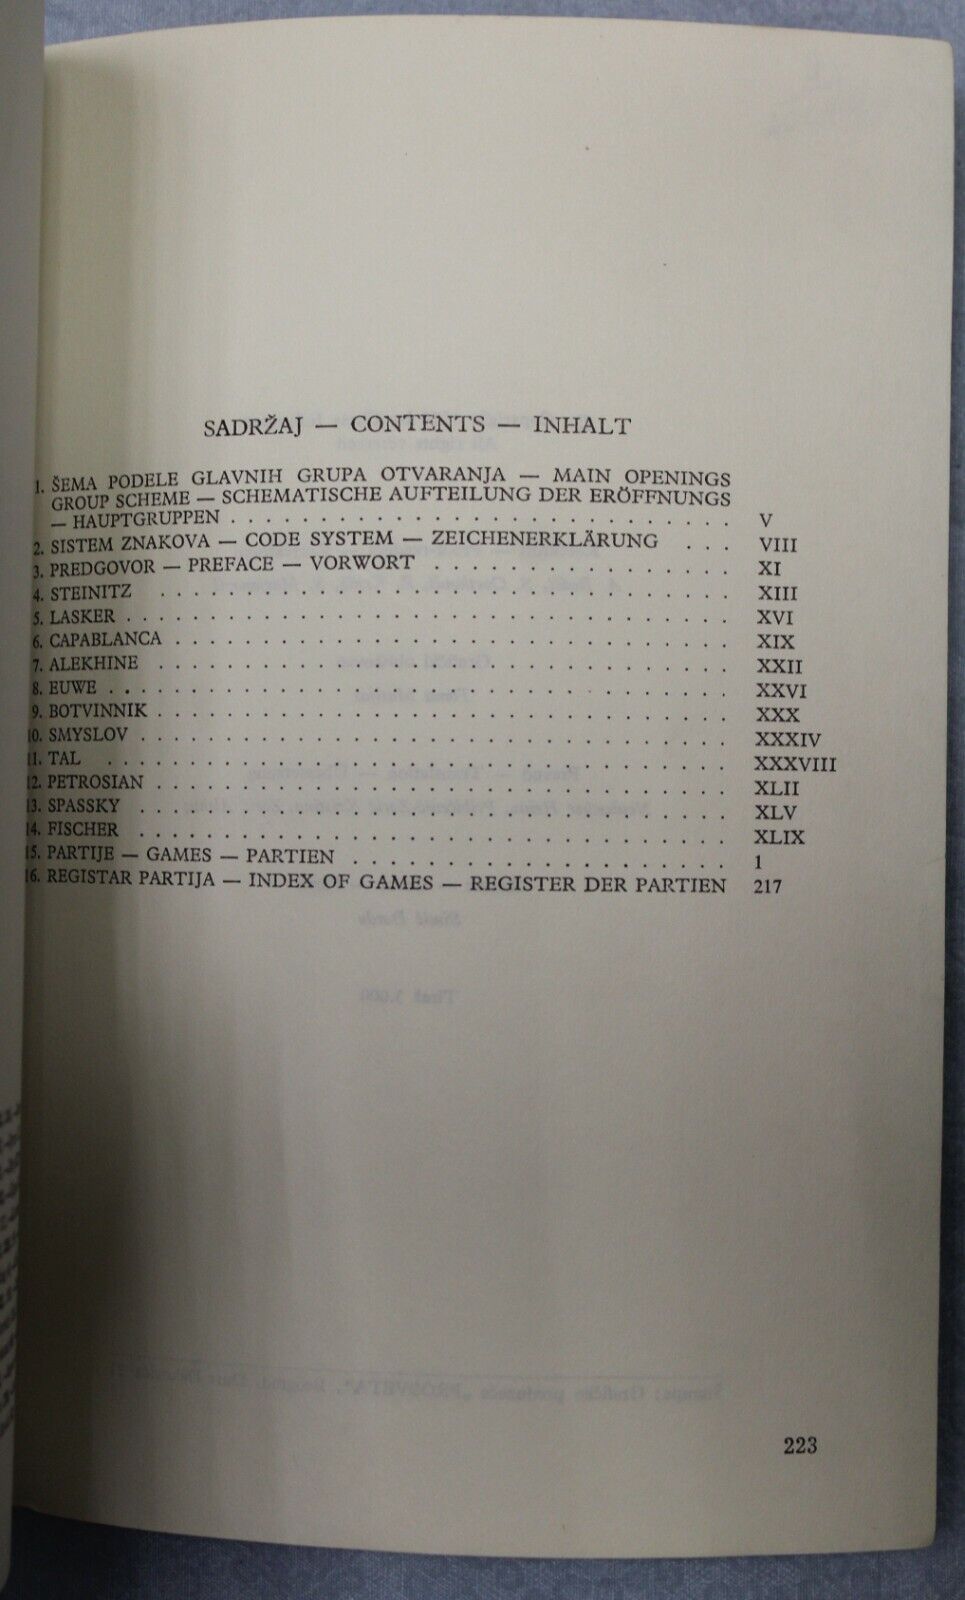 11099.Chess book: Od Stajnica do Fisera, M. Euwe, Beograd, 1976